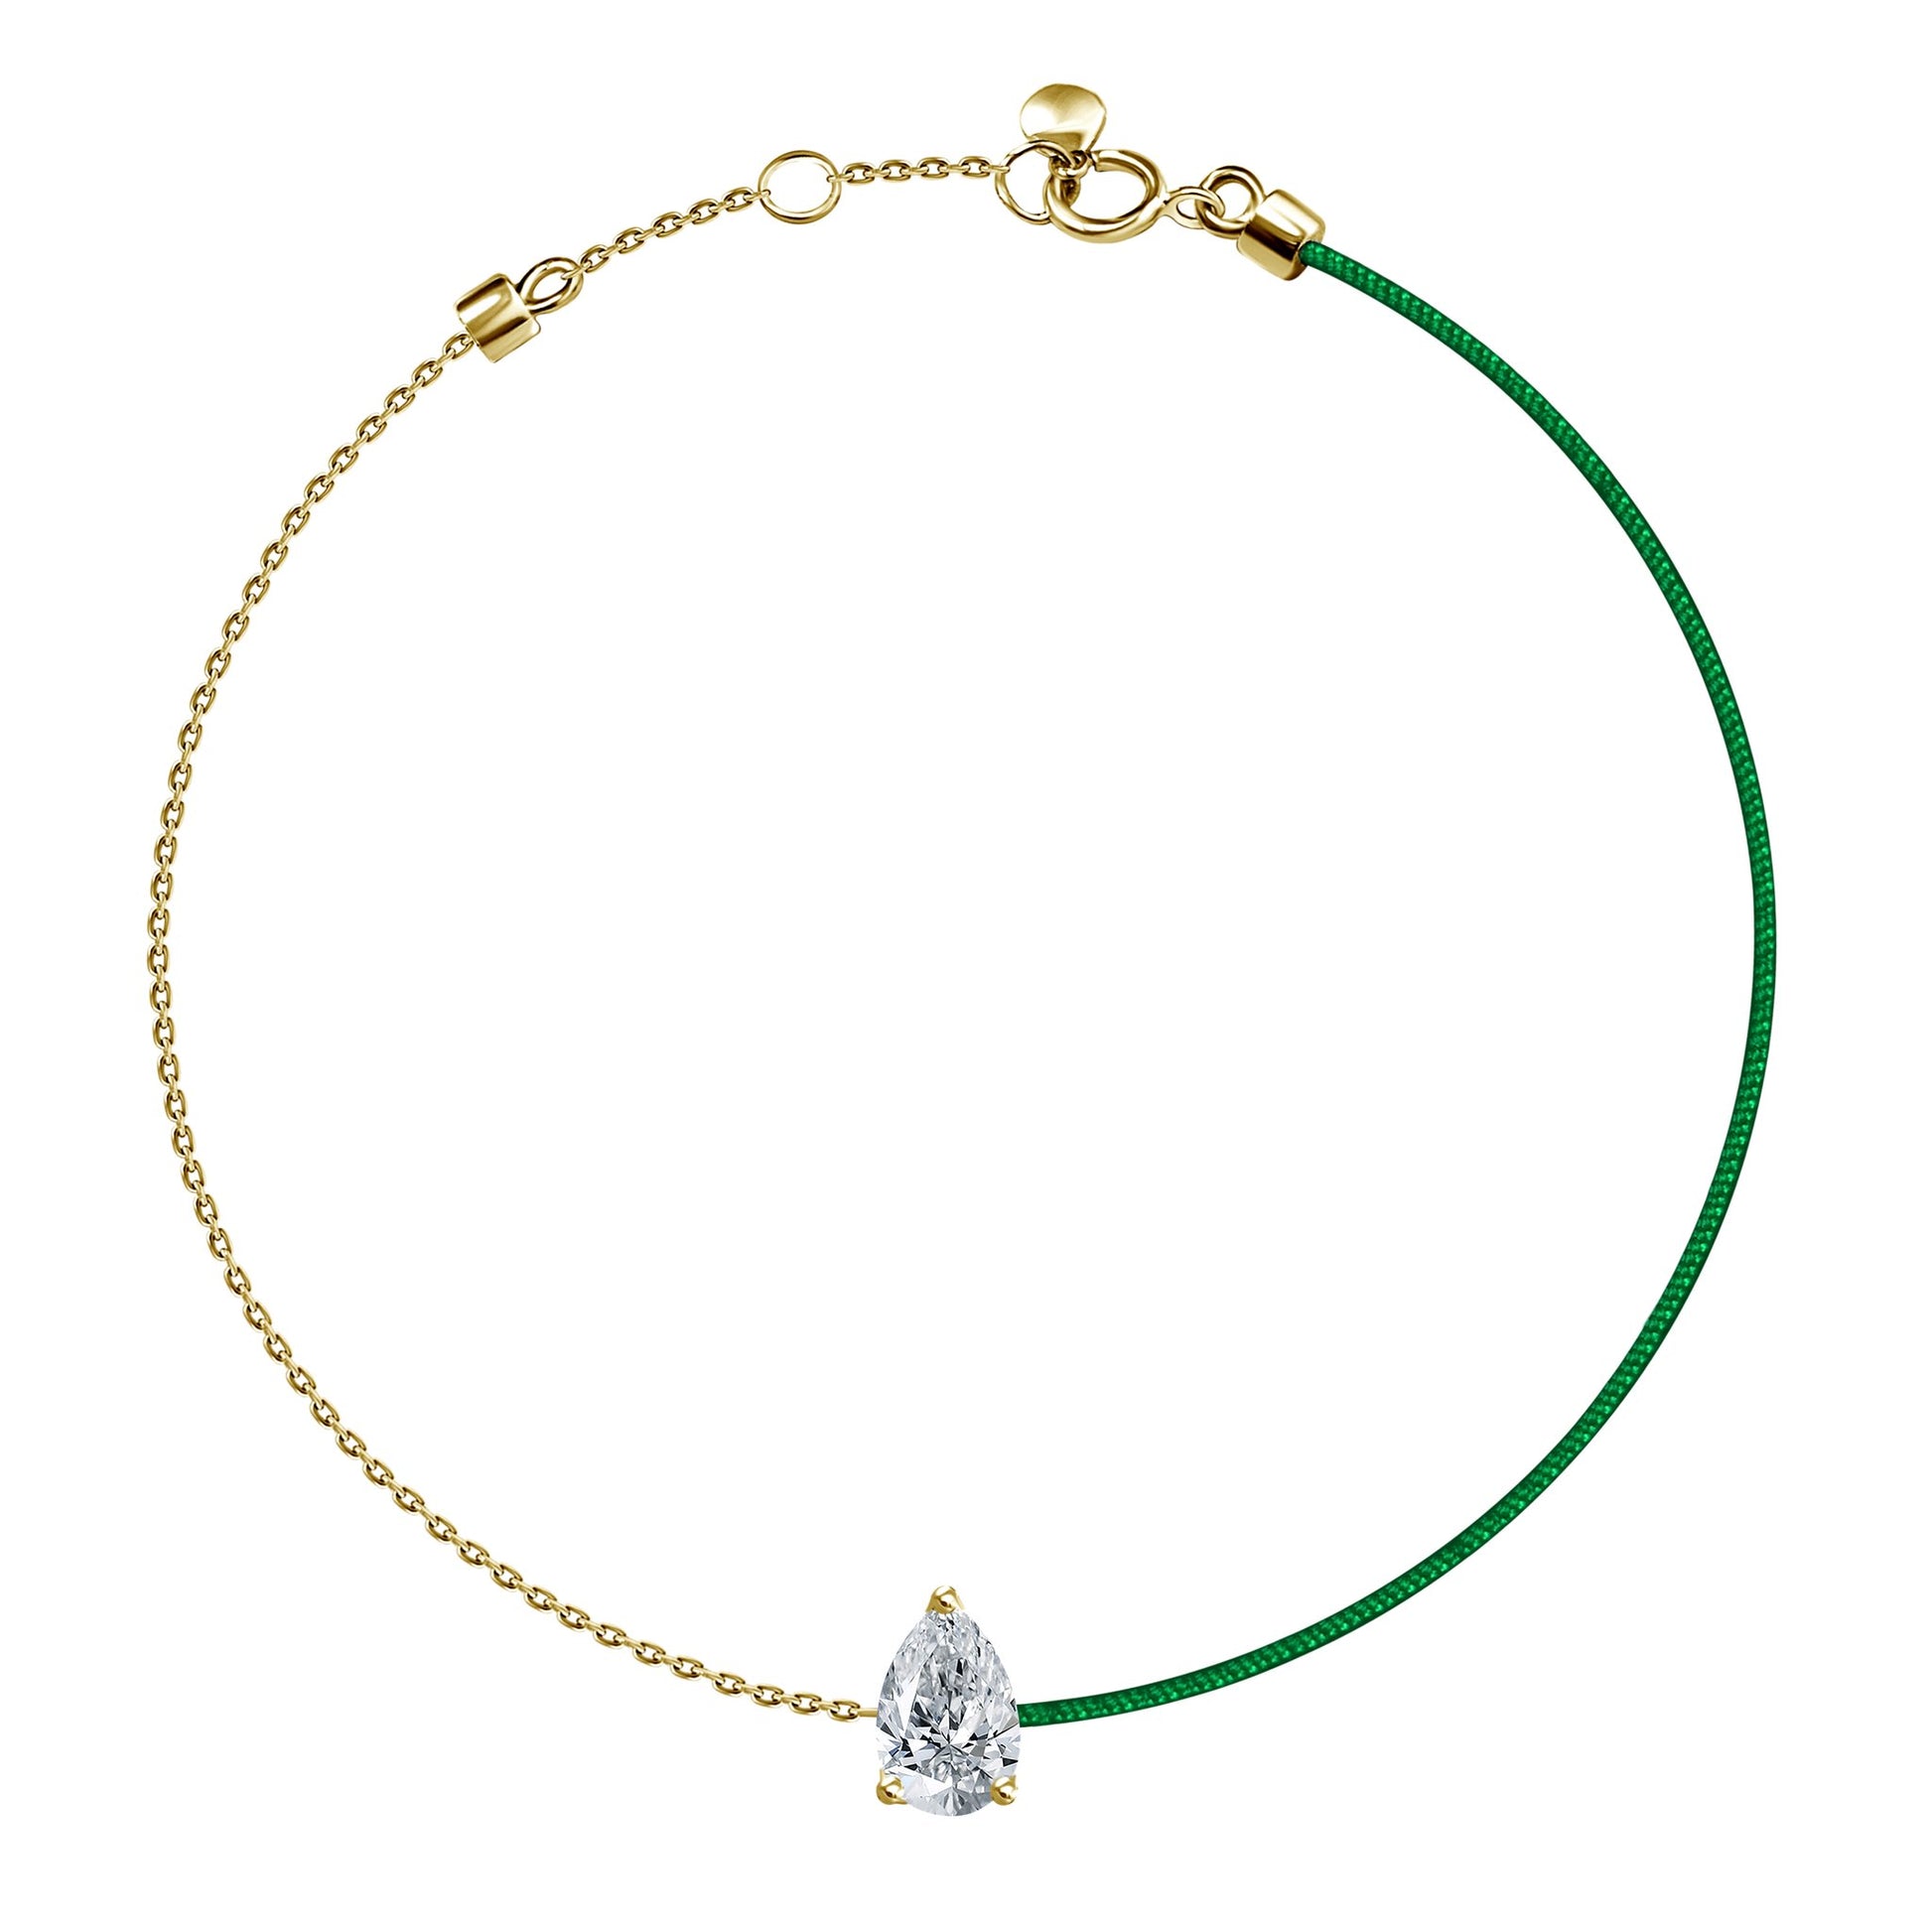 L'Arc Voyage Charm PM, 18K White Gold with Galerie Diamonds on Silk Cord Bracelet Caraïbes